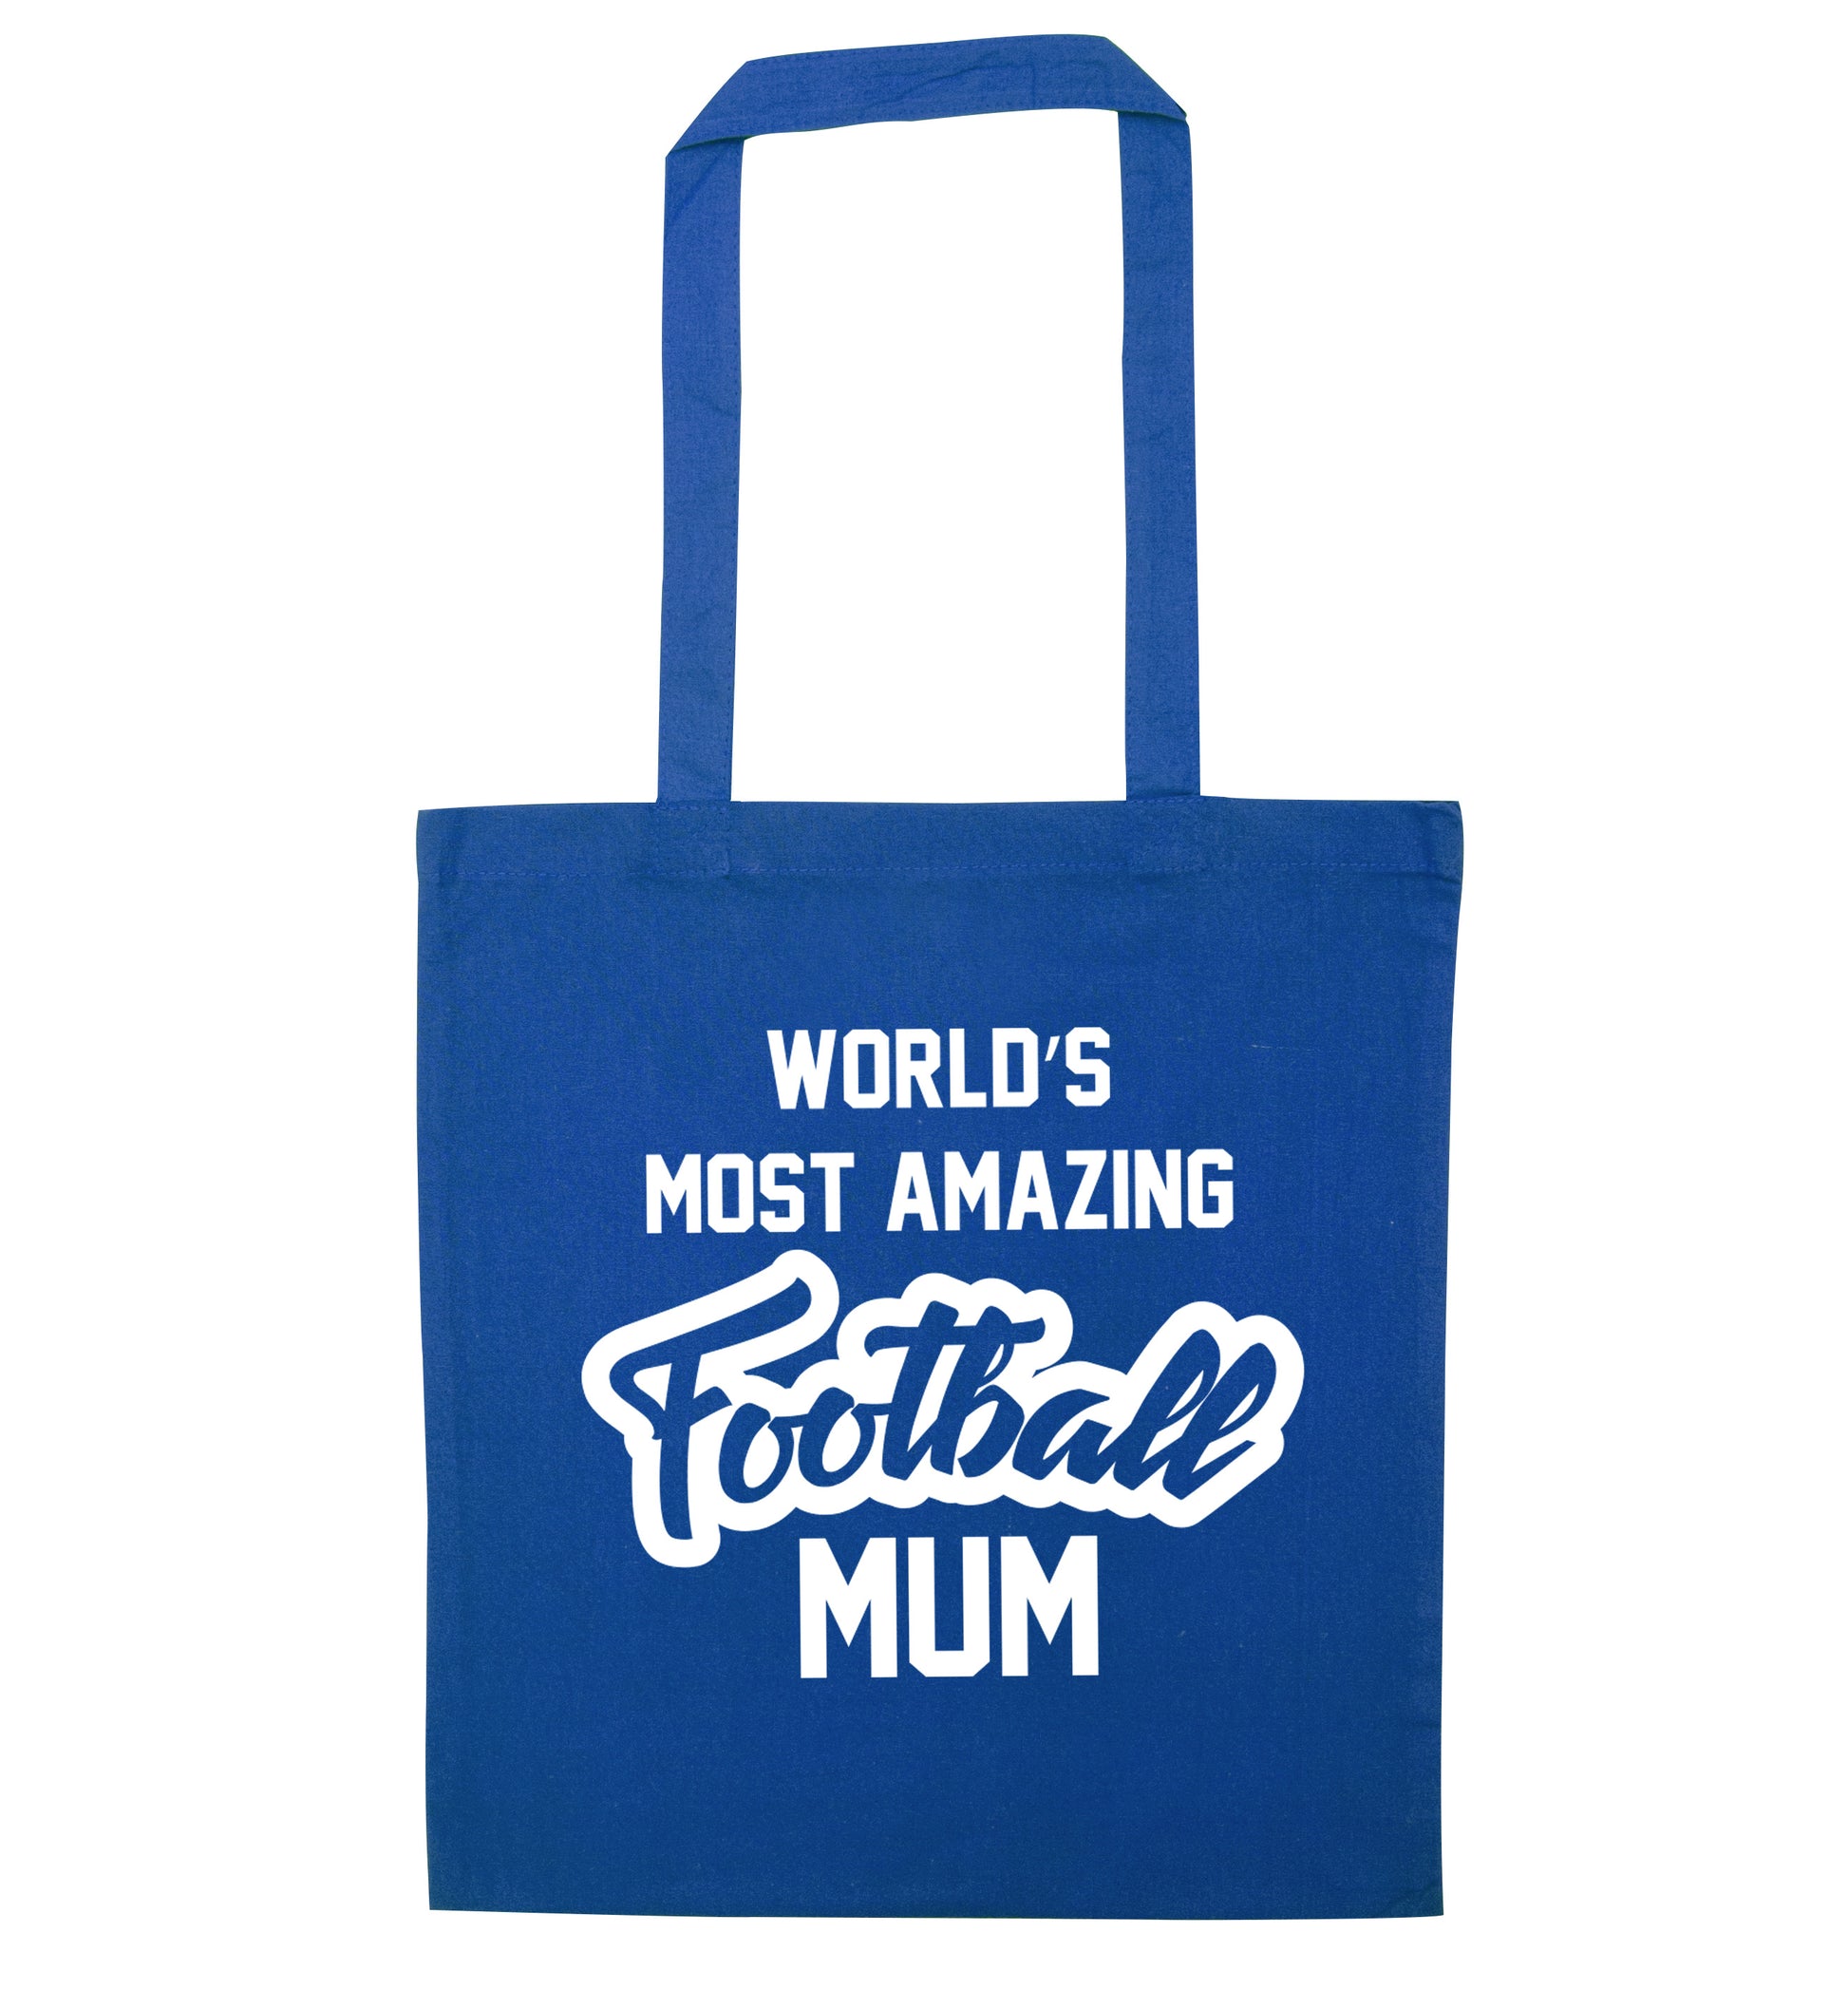 Worlds most amazing football mum blue tote bag